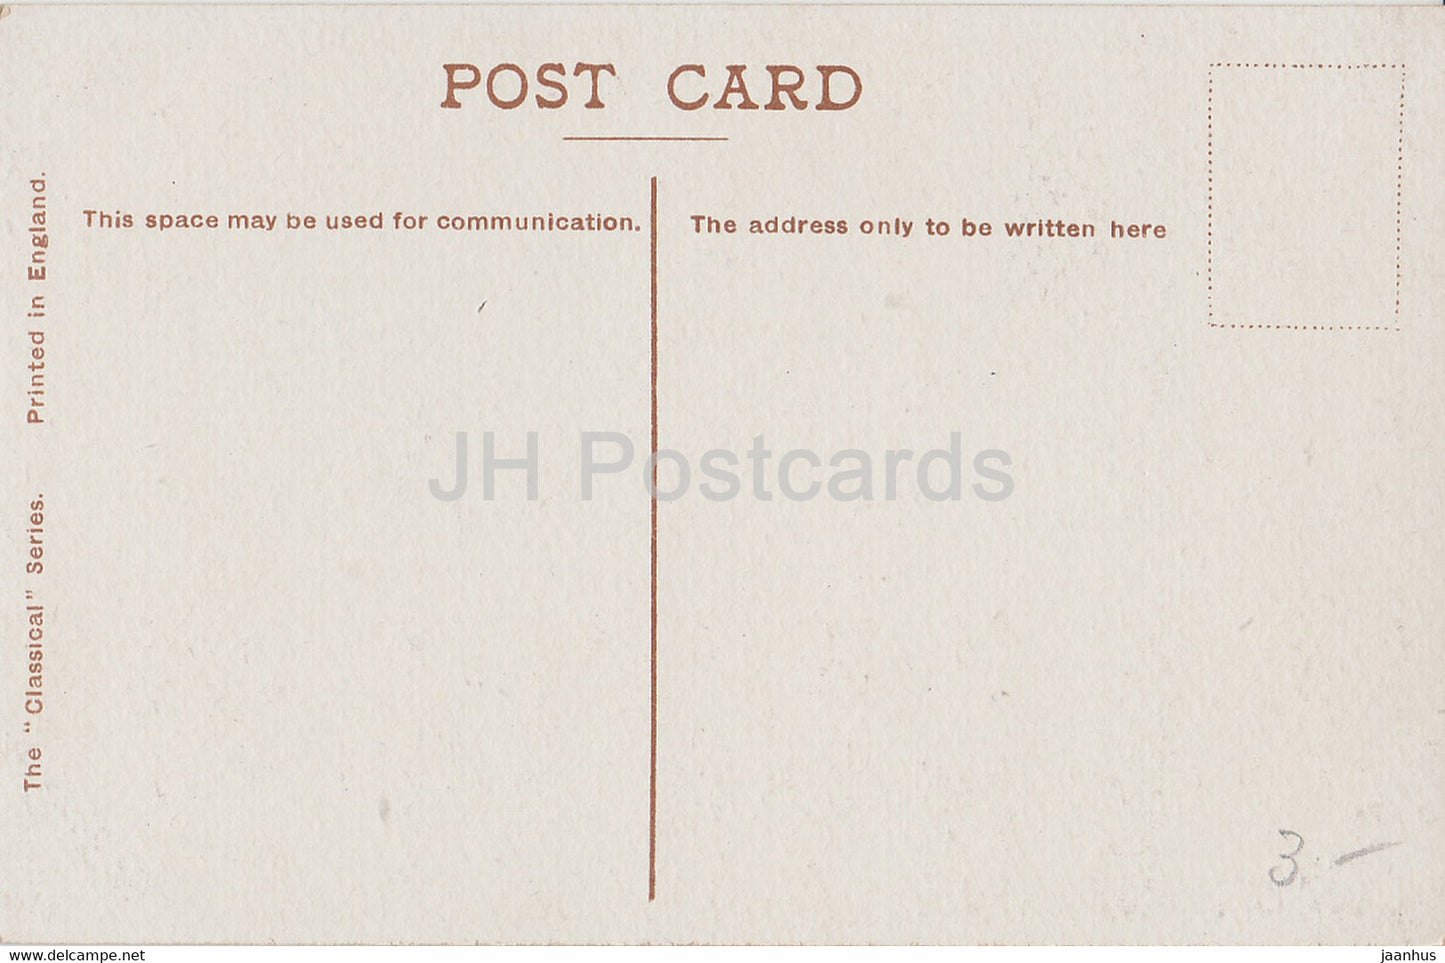 London - Trafalgar Square - The Classical Series - old postcard - England - United Kingdom - unused